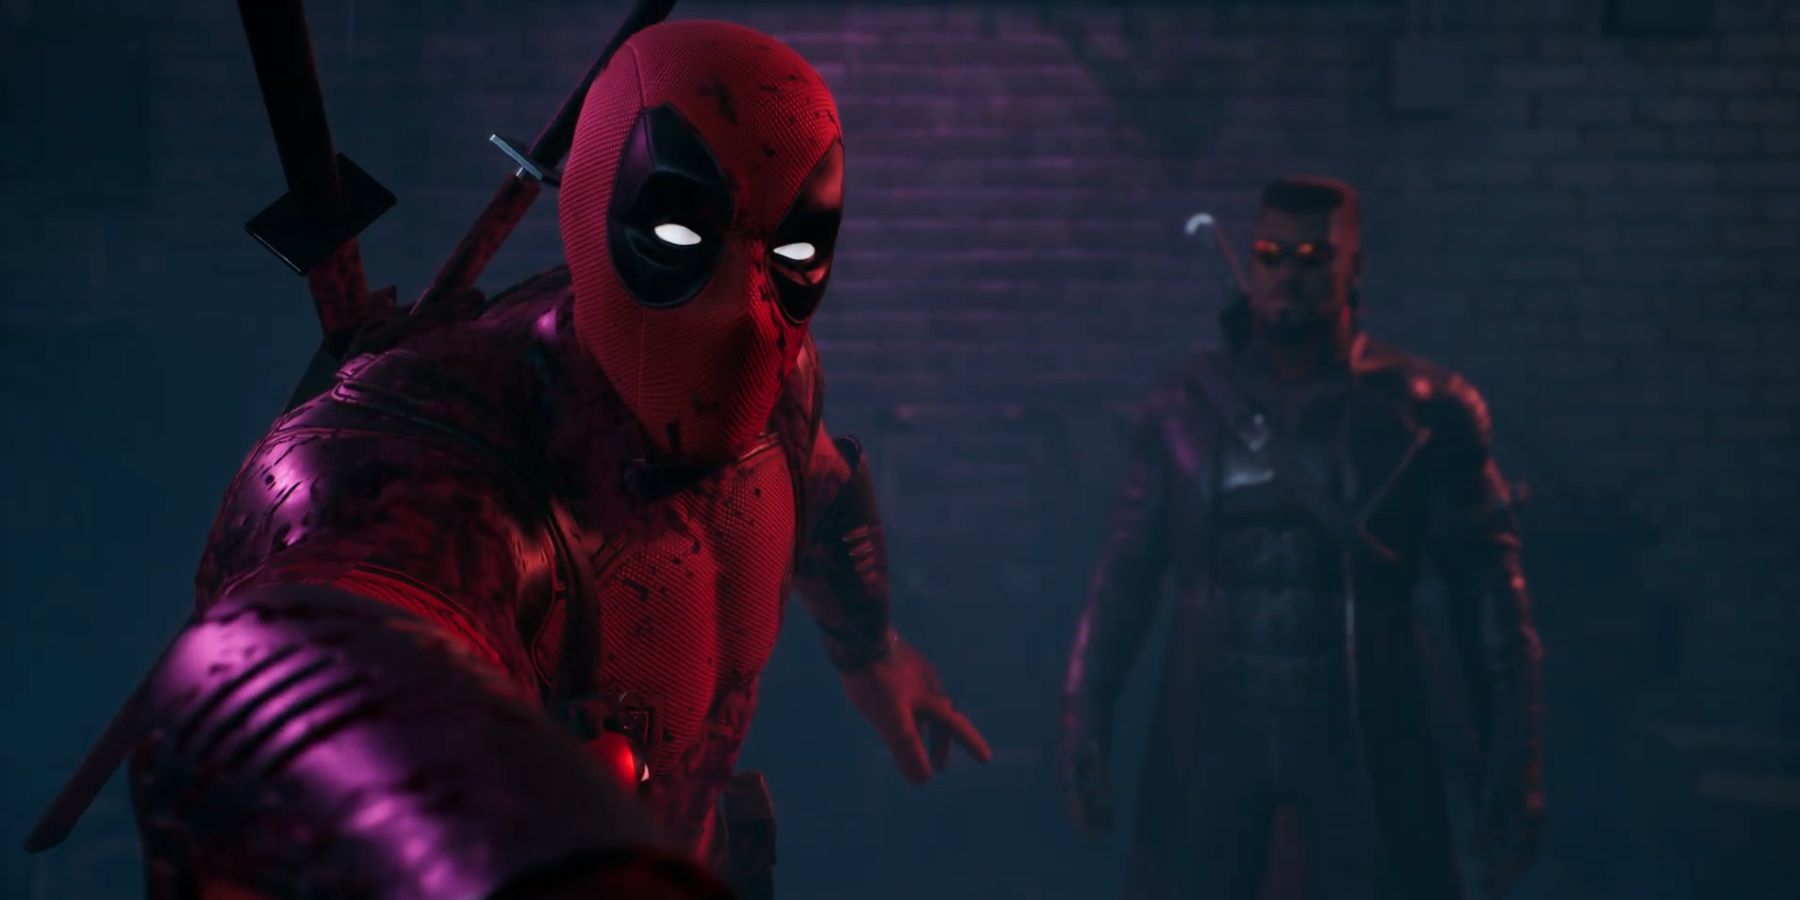 Marvel's Midnight Suns' Deadpool DLC gets January release date